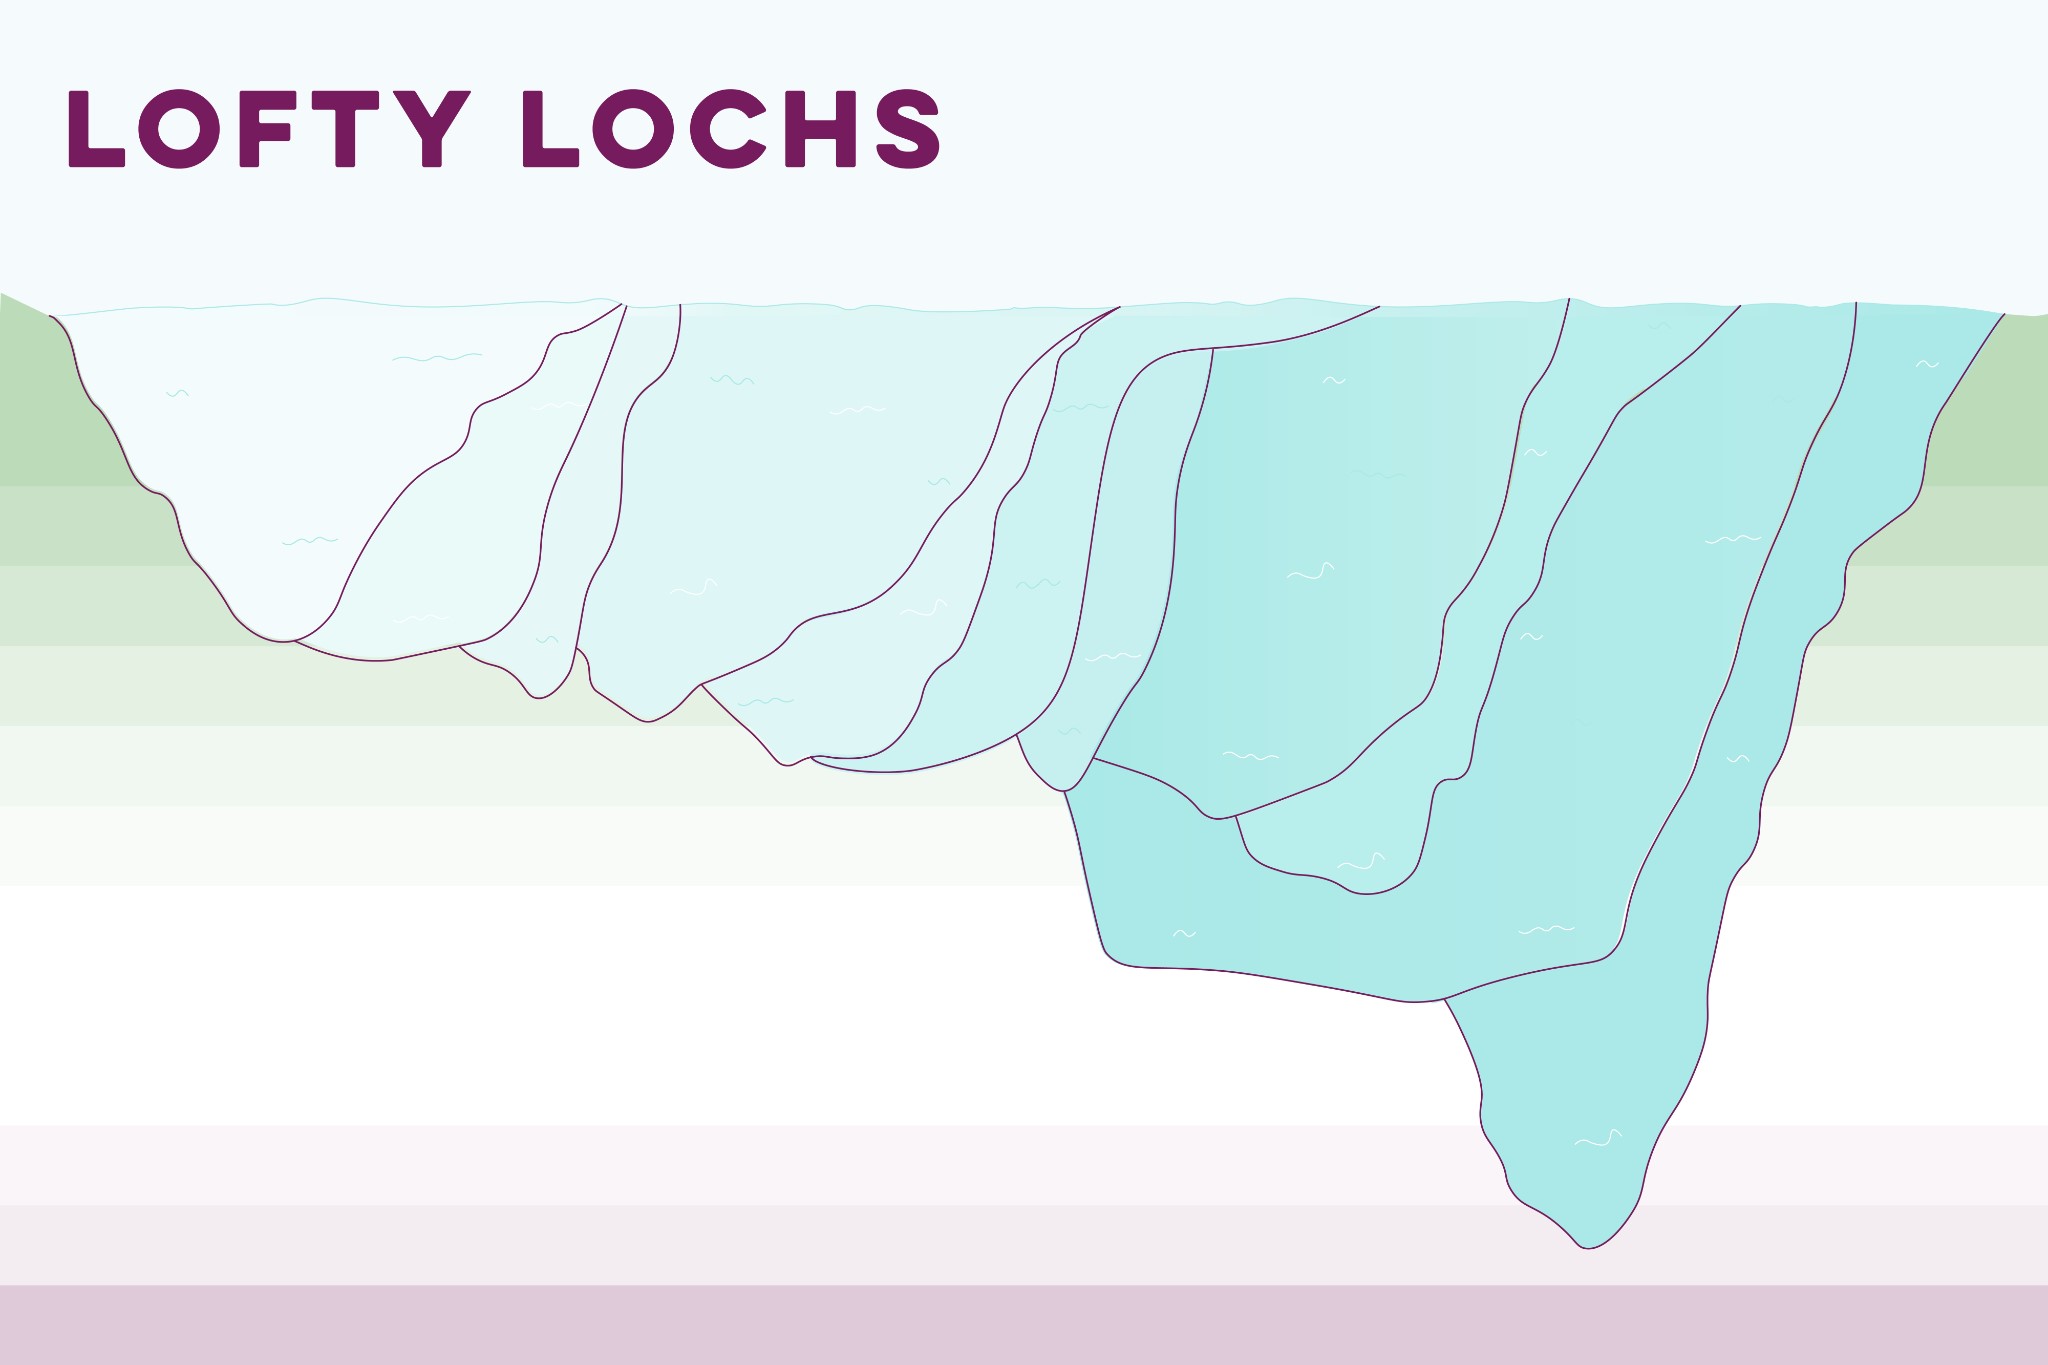 Scotland's loch comparisons